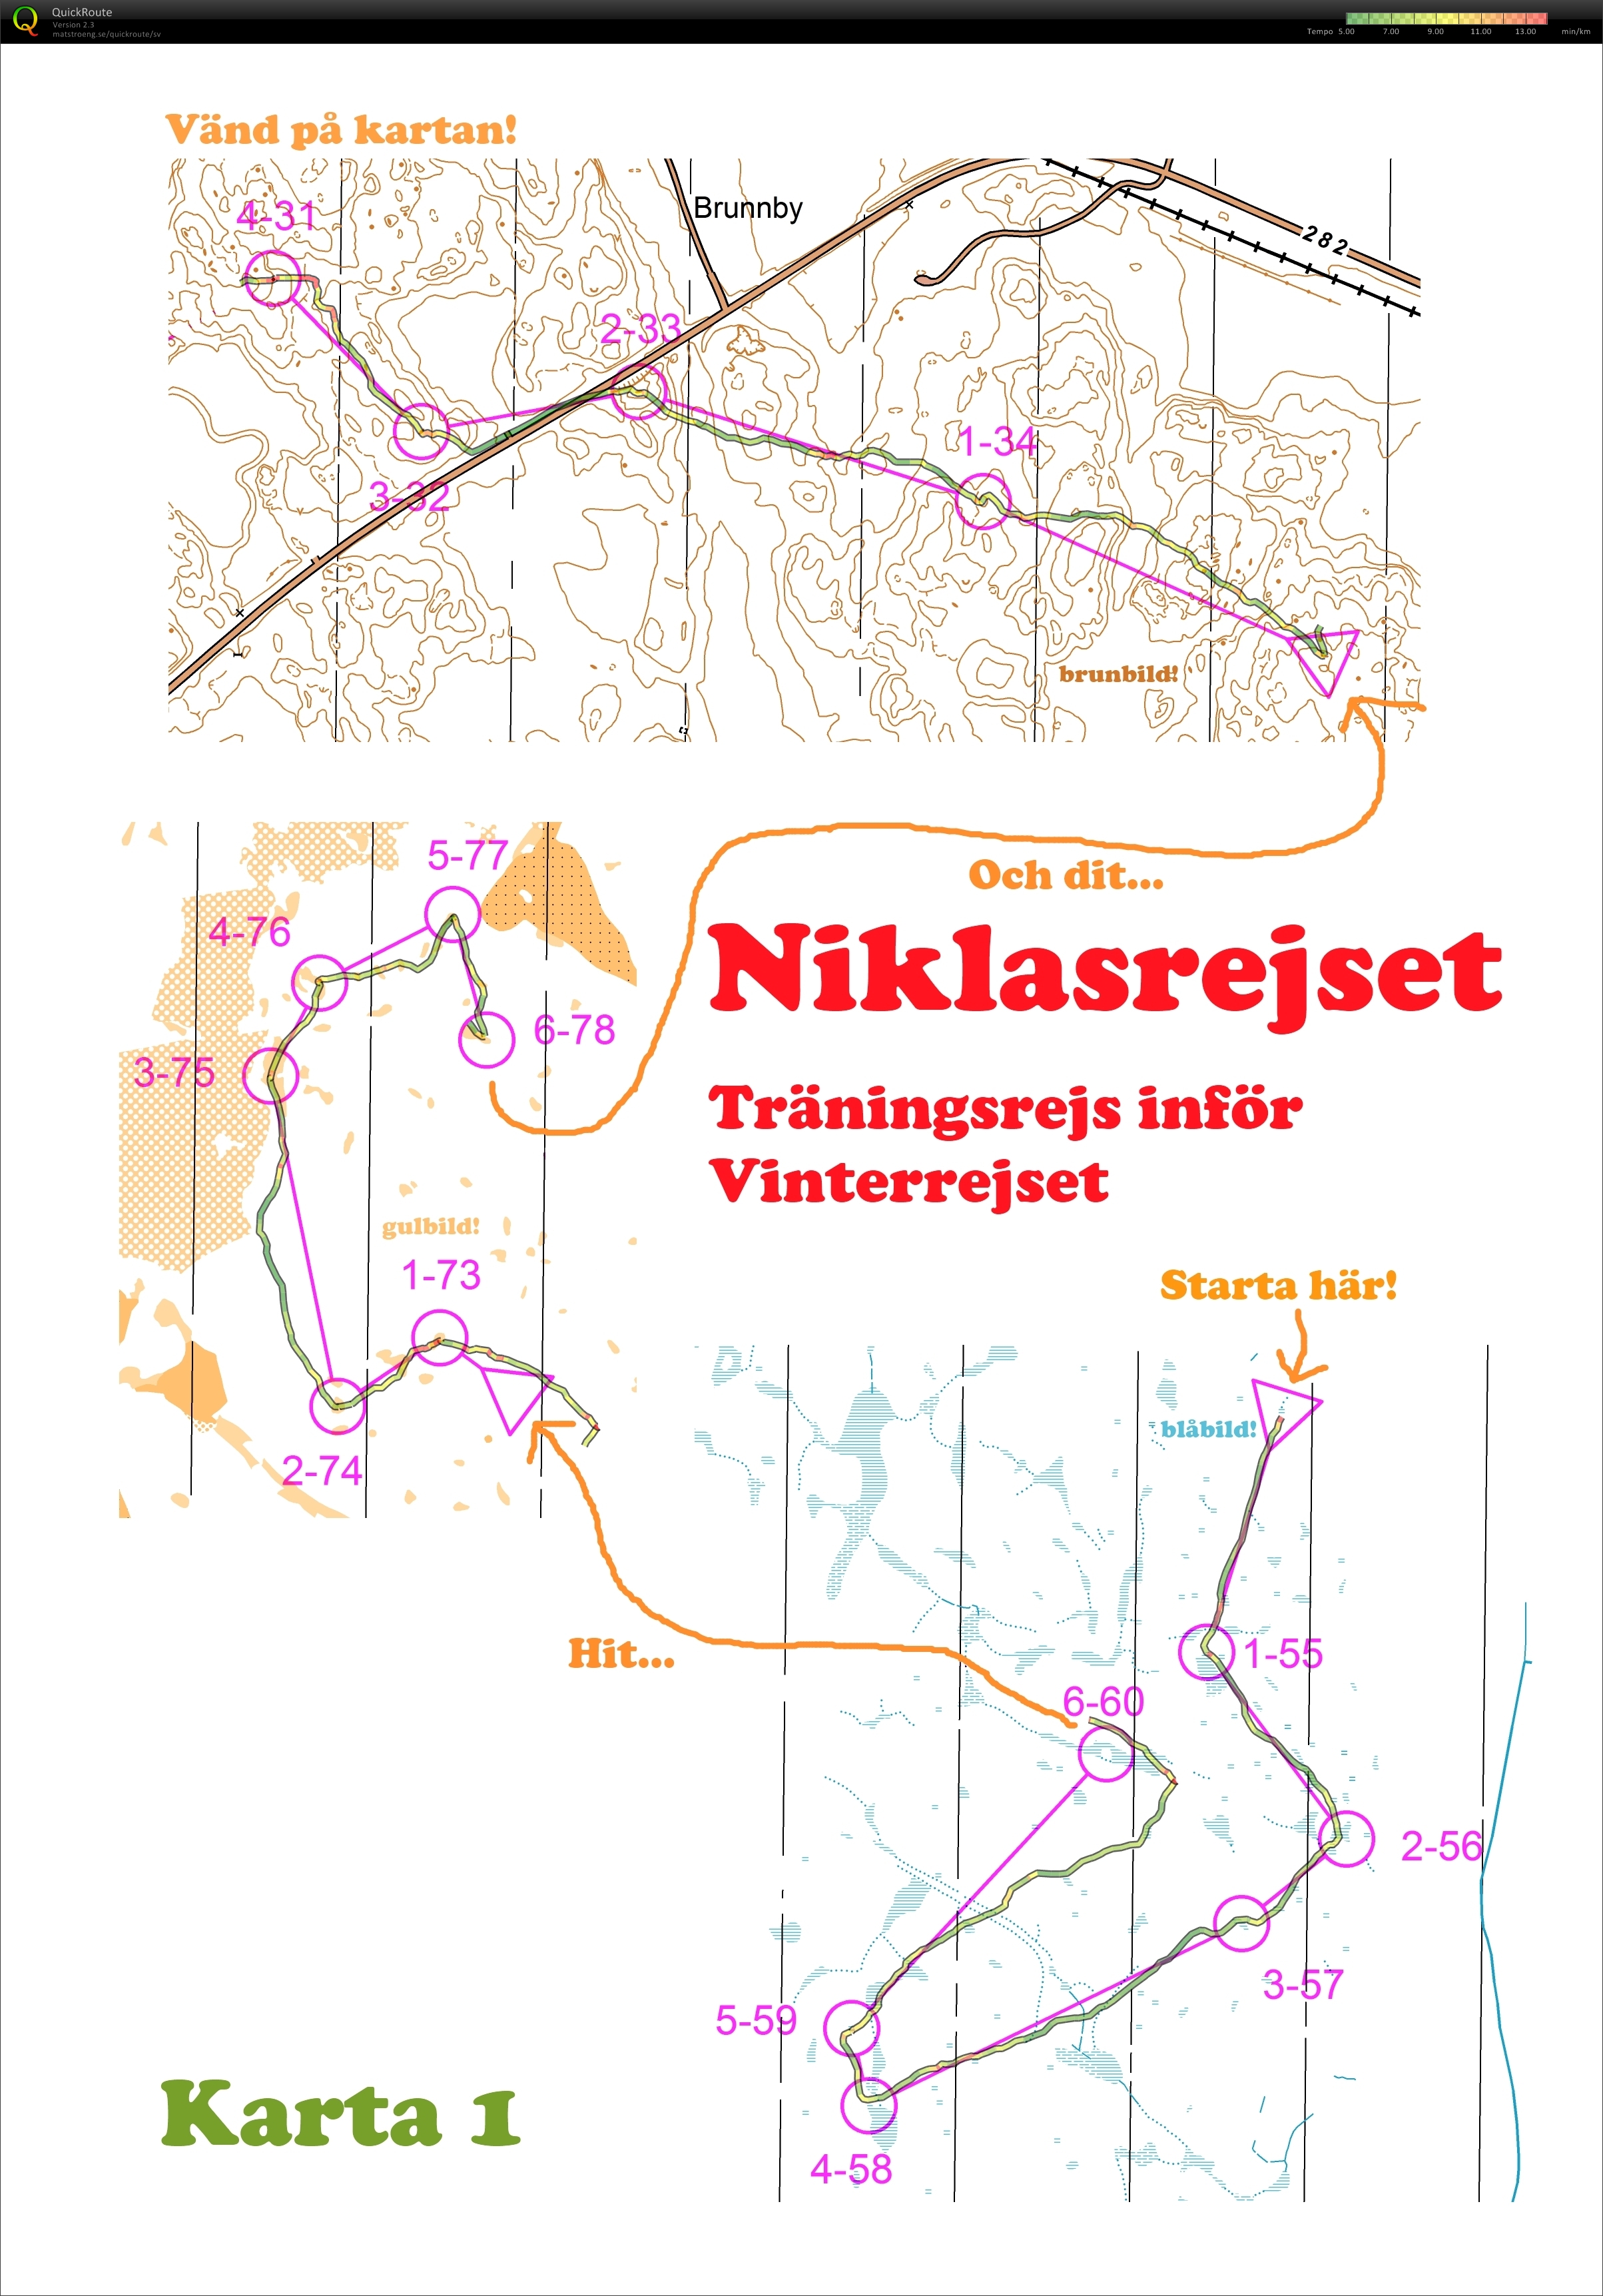 Niklasrejset - karta 1 (05.08.2011)